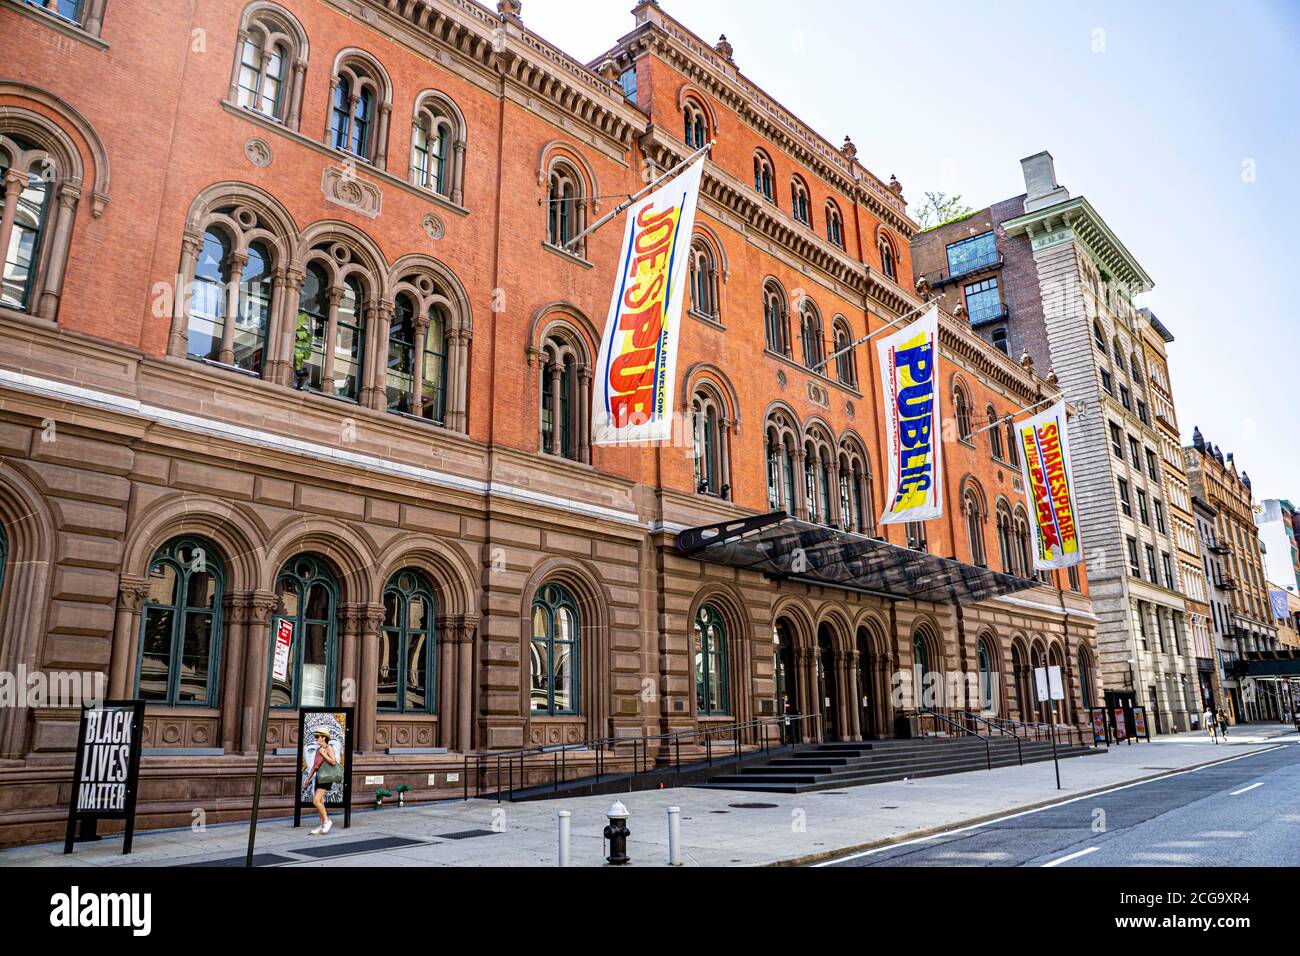 Public Theater, Exterior Façade and Street Scene, 425 Lafayette Street, New York City, New York, USA Stock Photo